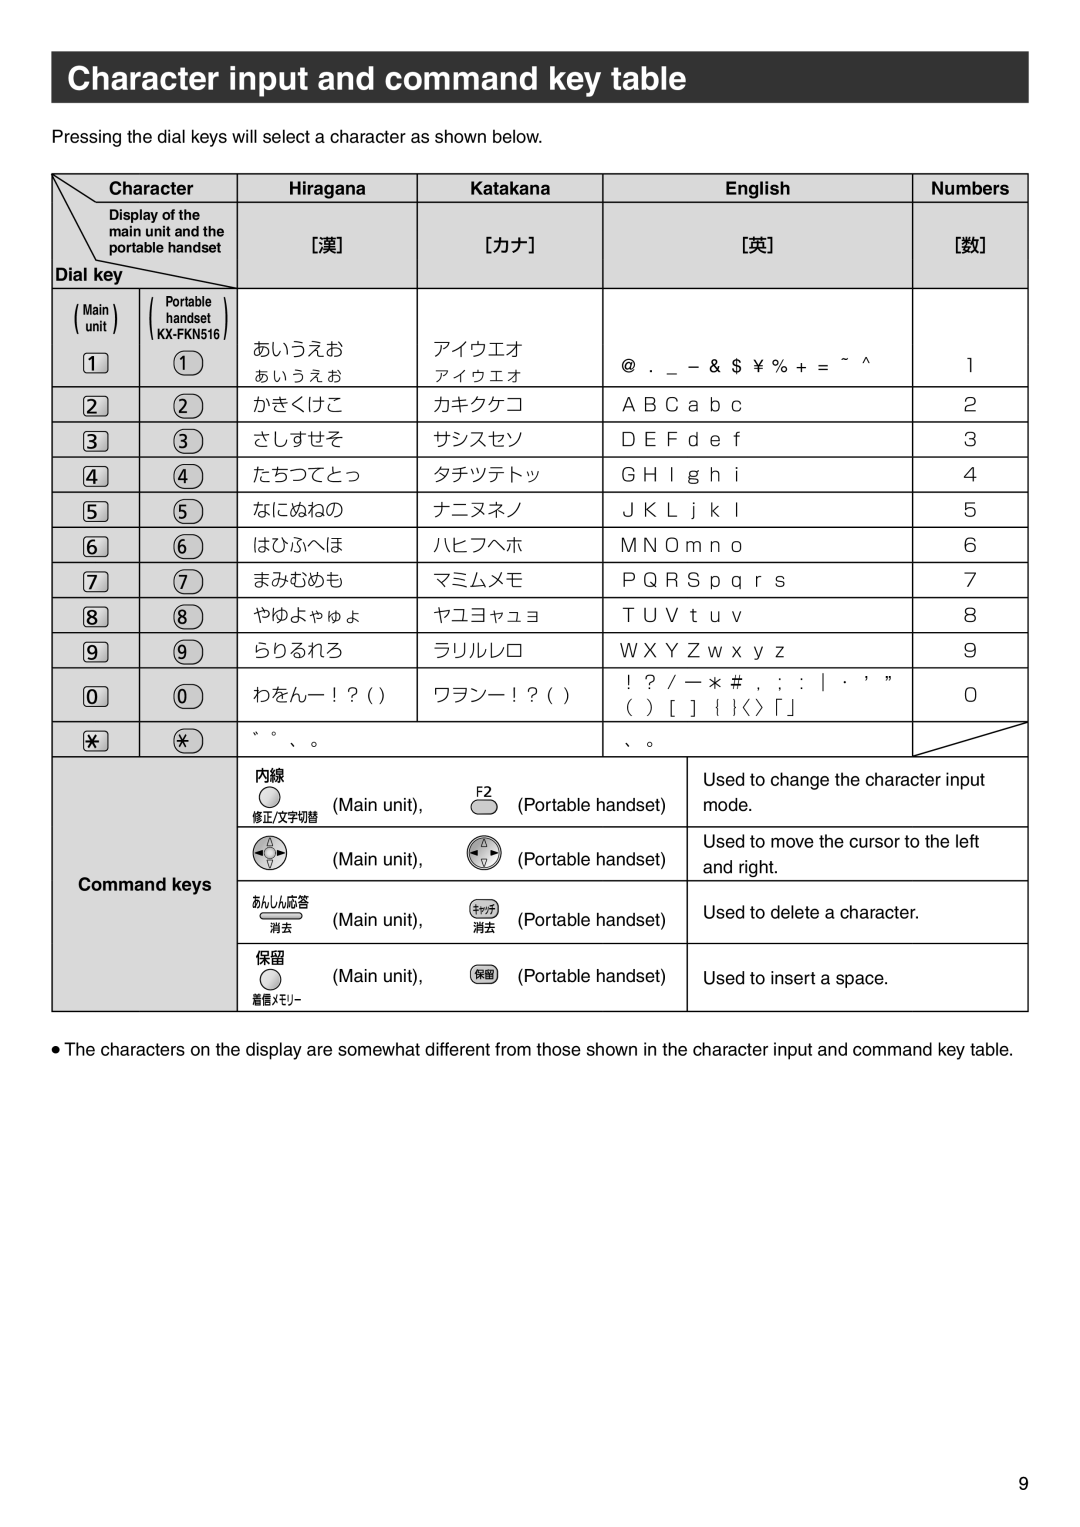 Panasonic KX-PW708DWE5 Character input and command key table, Hiragana, Katakana, English, Numbers, Dial key, Command keys 